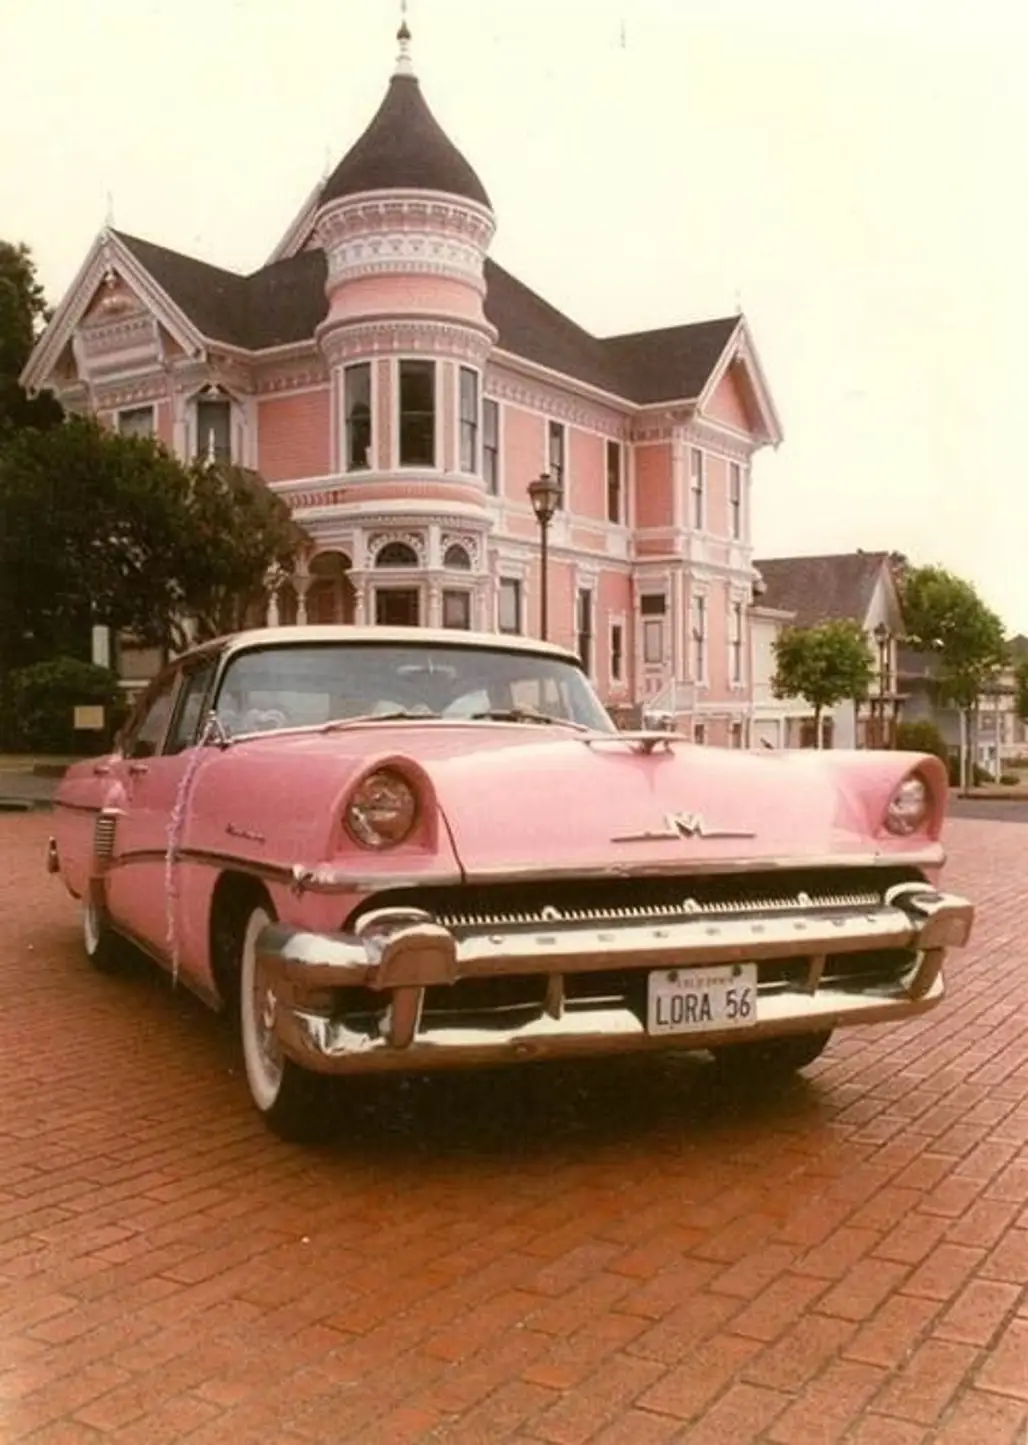 Dream House with Car